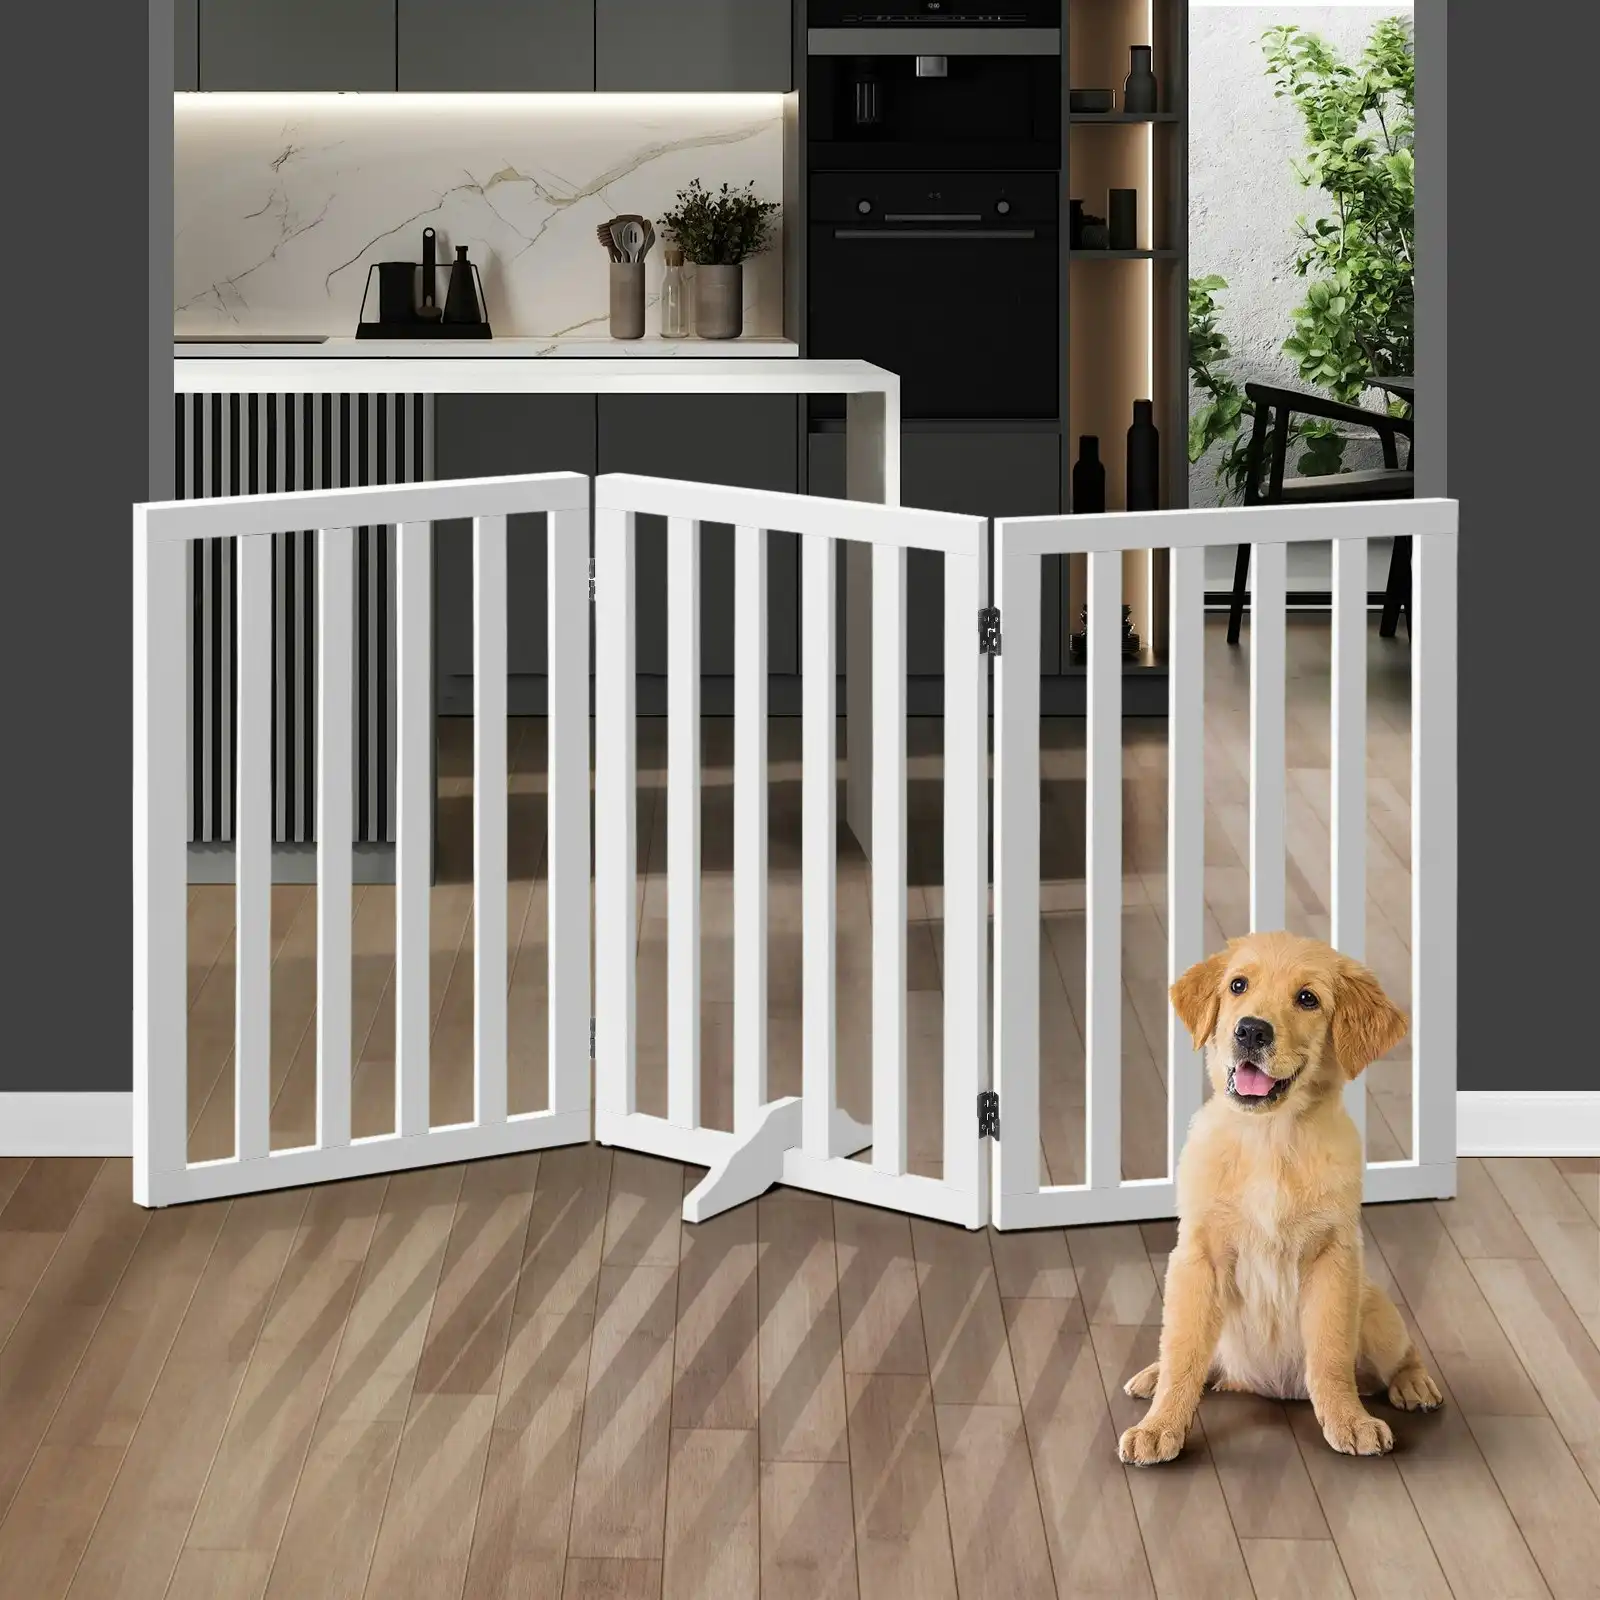 Alopet Wooden Pet Gate Dog Fence Safety Stair Barrier Security Door 3-Panel 80cm